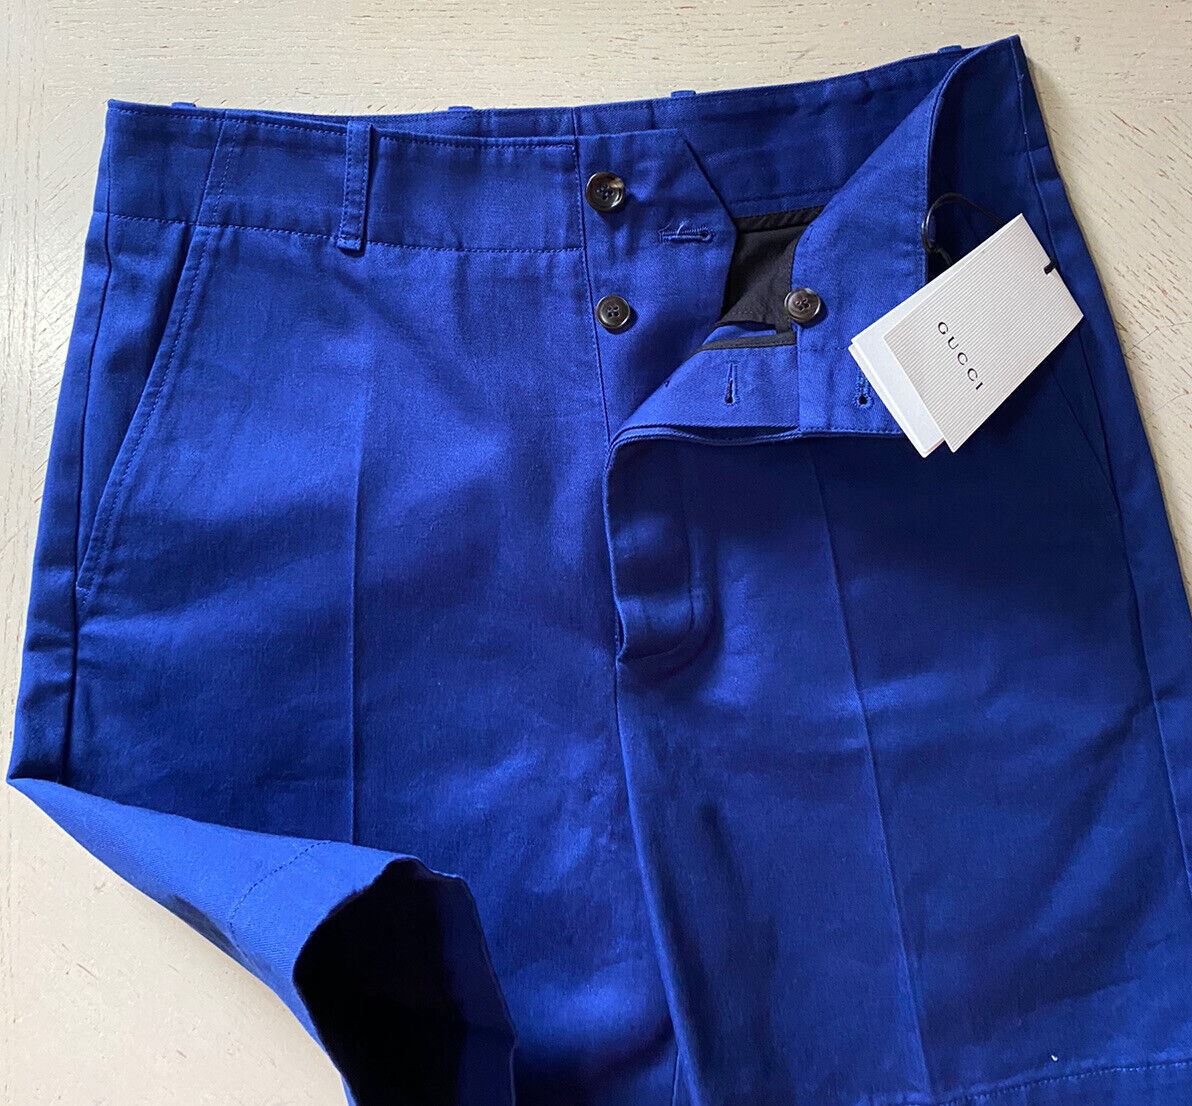 NWT Gucci Mens Military Cotton Short Pants Blue Size 30 US/46 Eu Italy